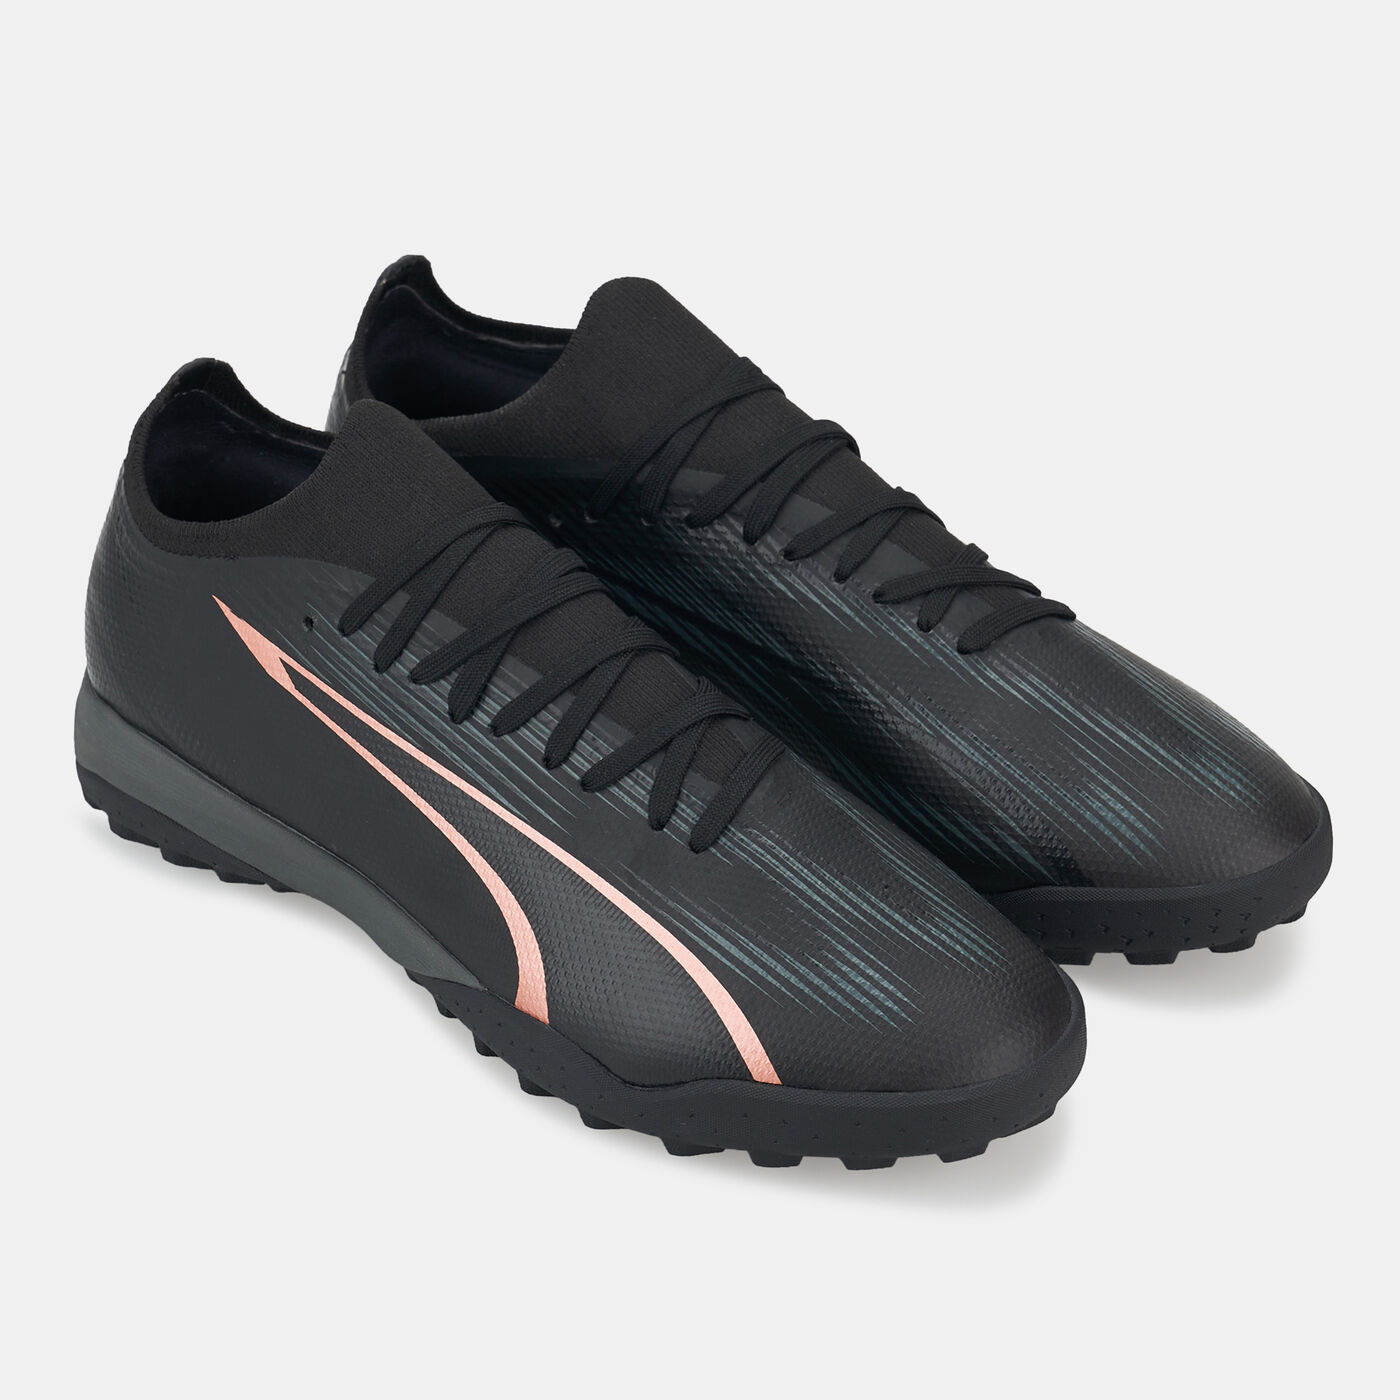 Men's ULTRA MATCH Turf Ground Football Shoes